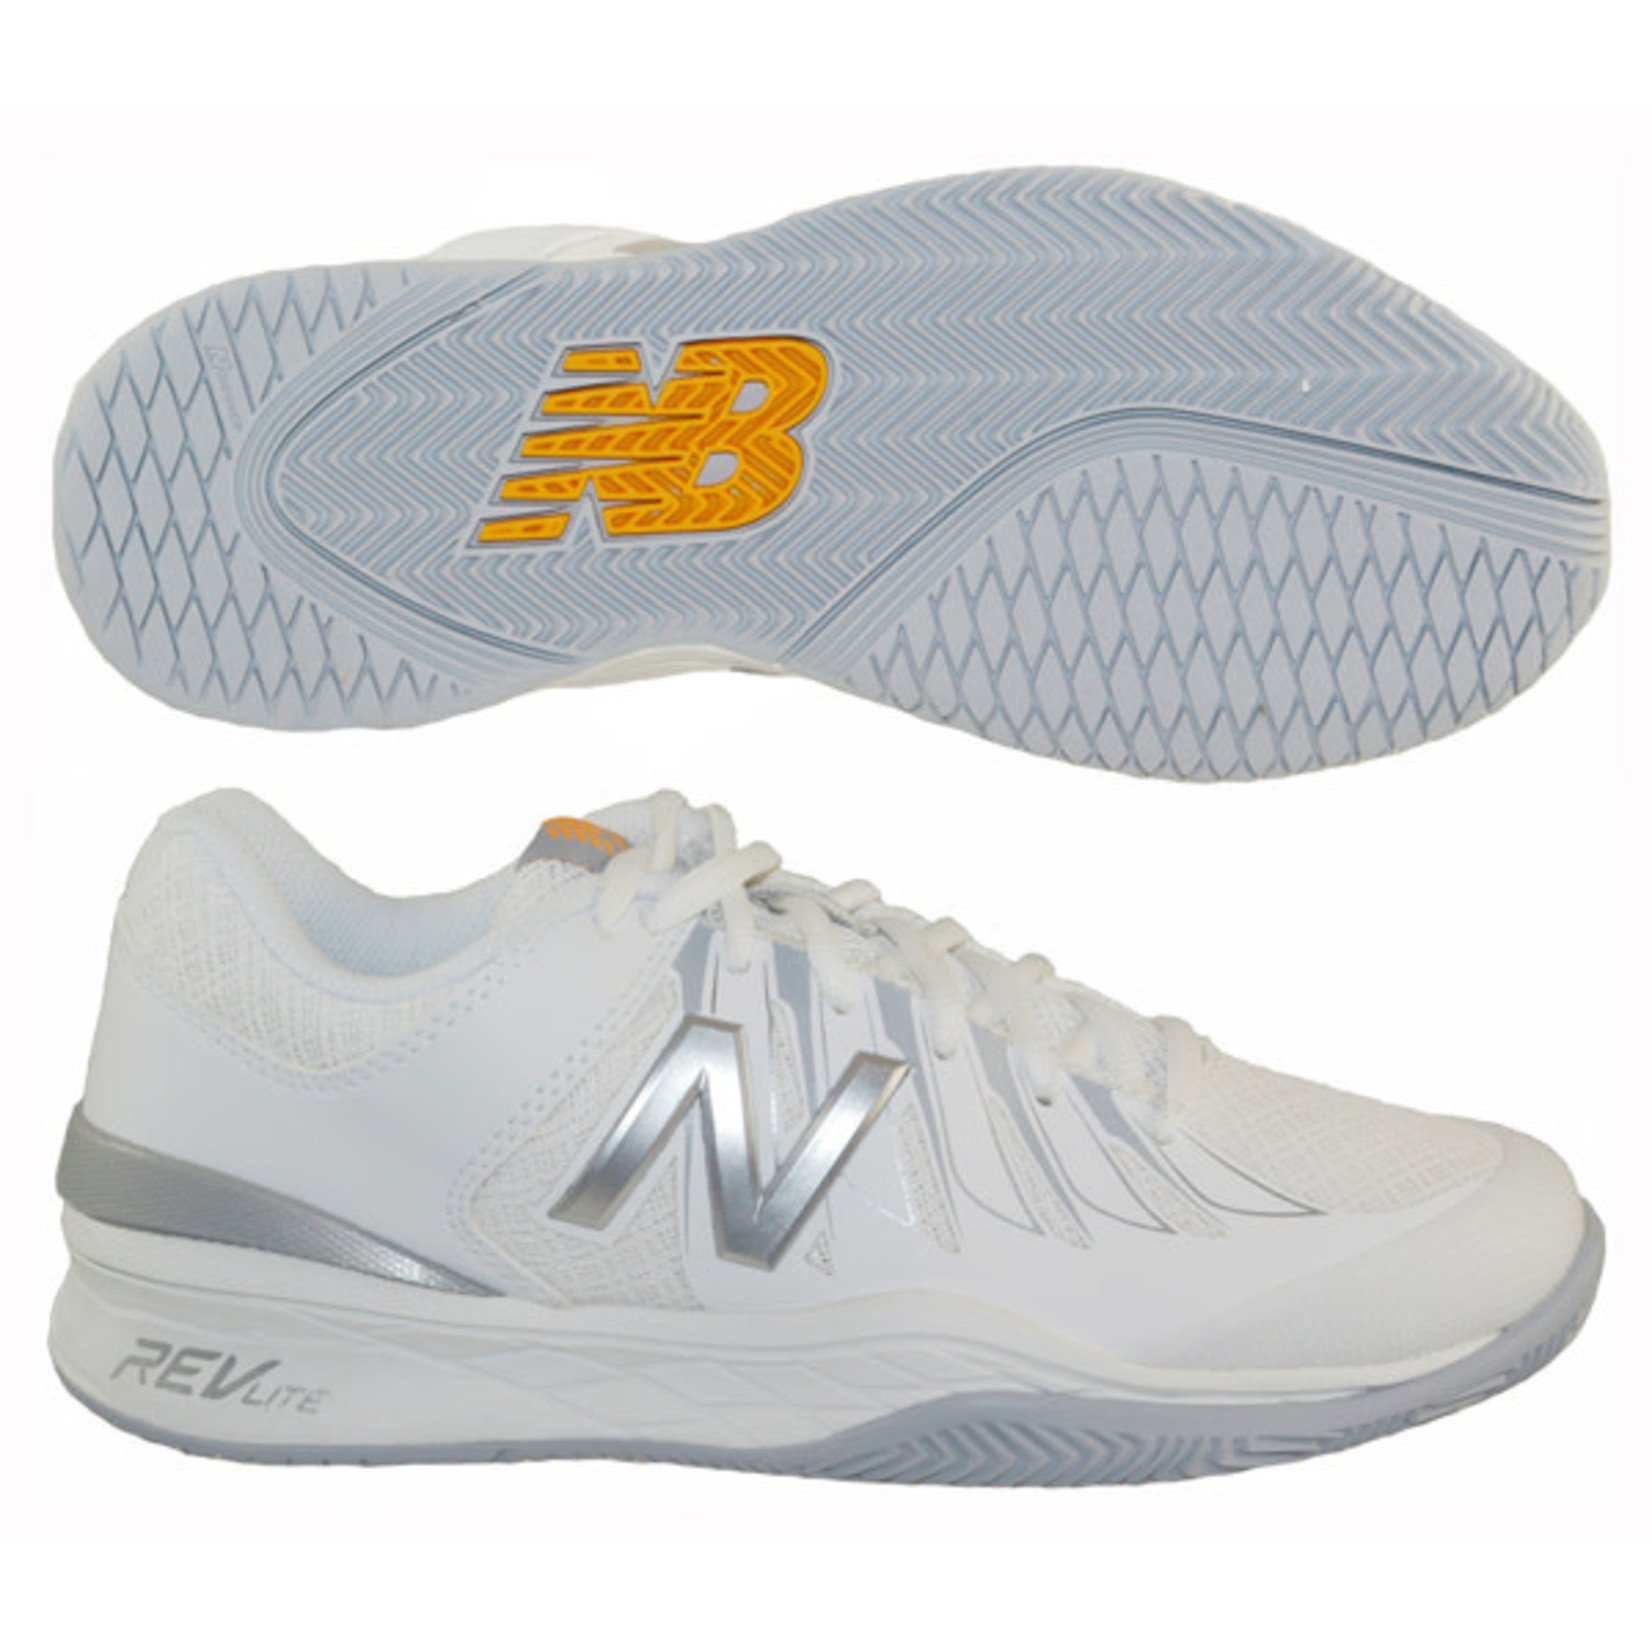 New Balance New Balance 1006 White/Silver Women's Tennis Shoes